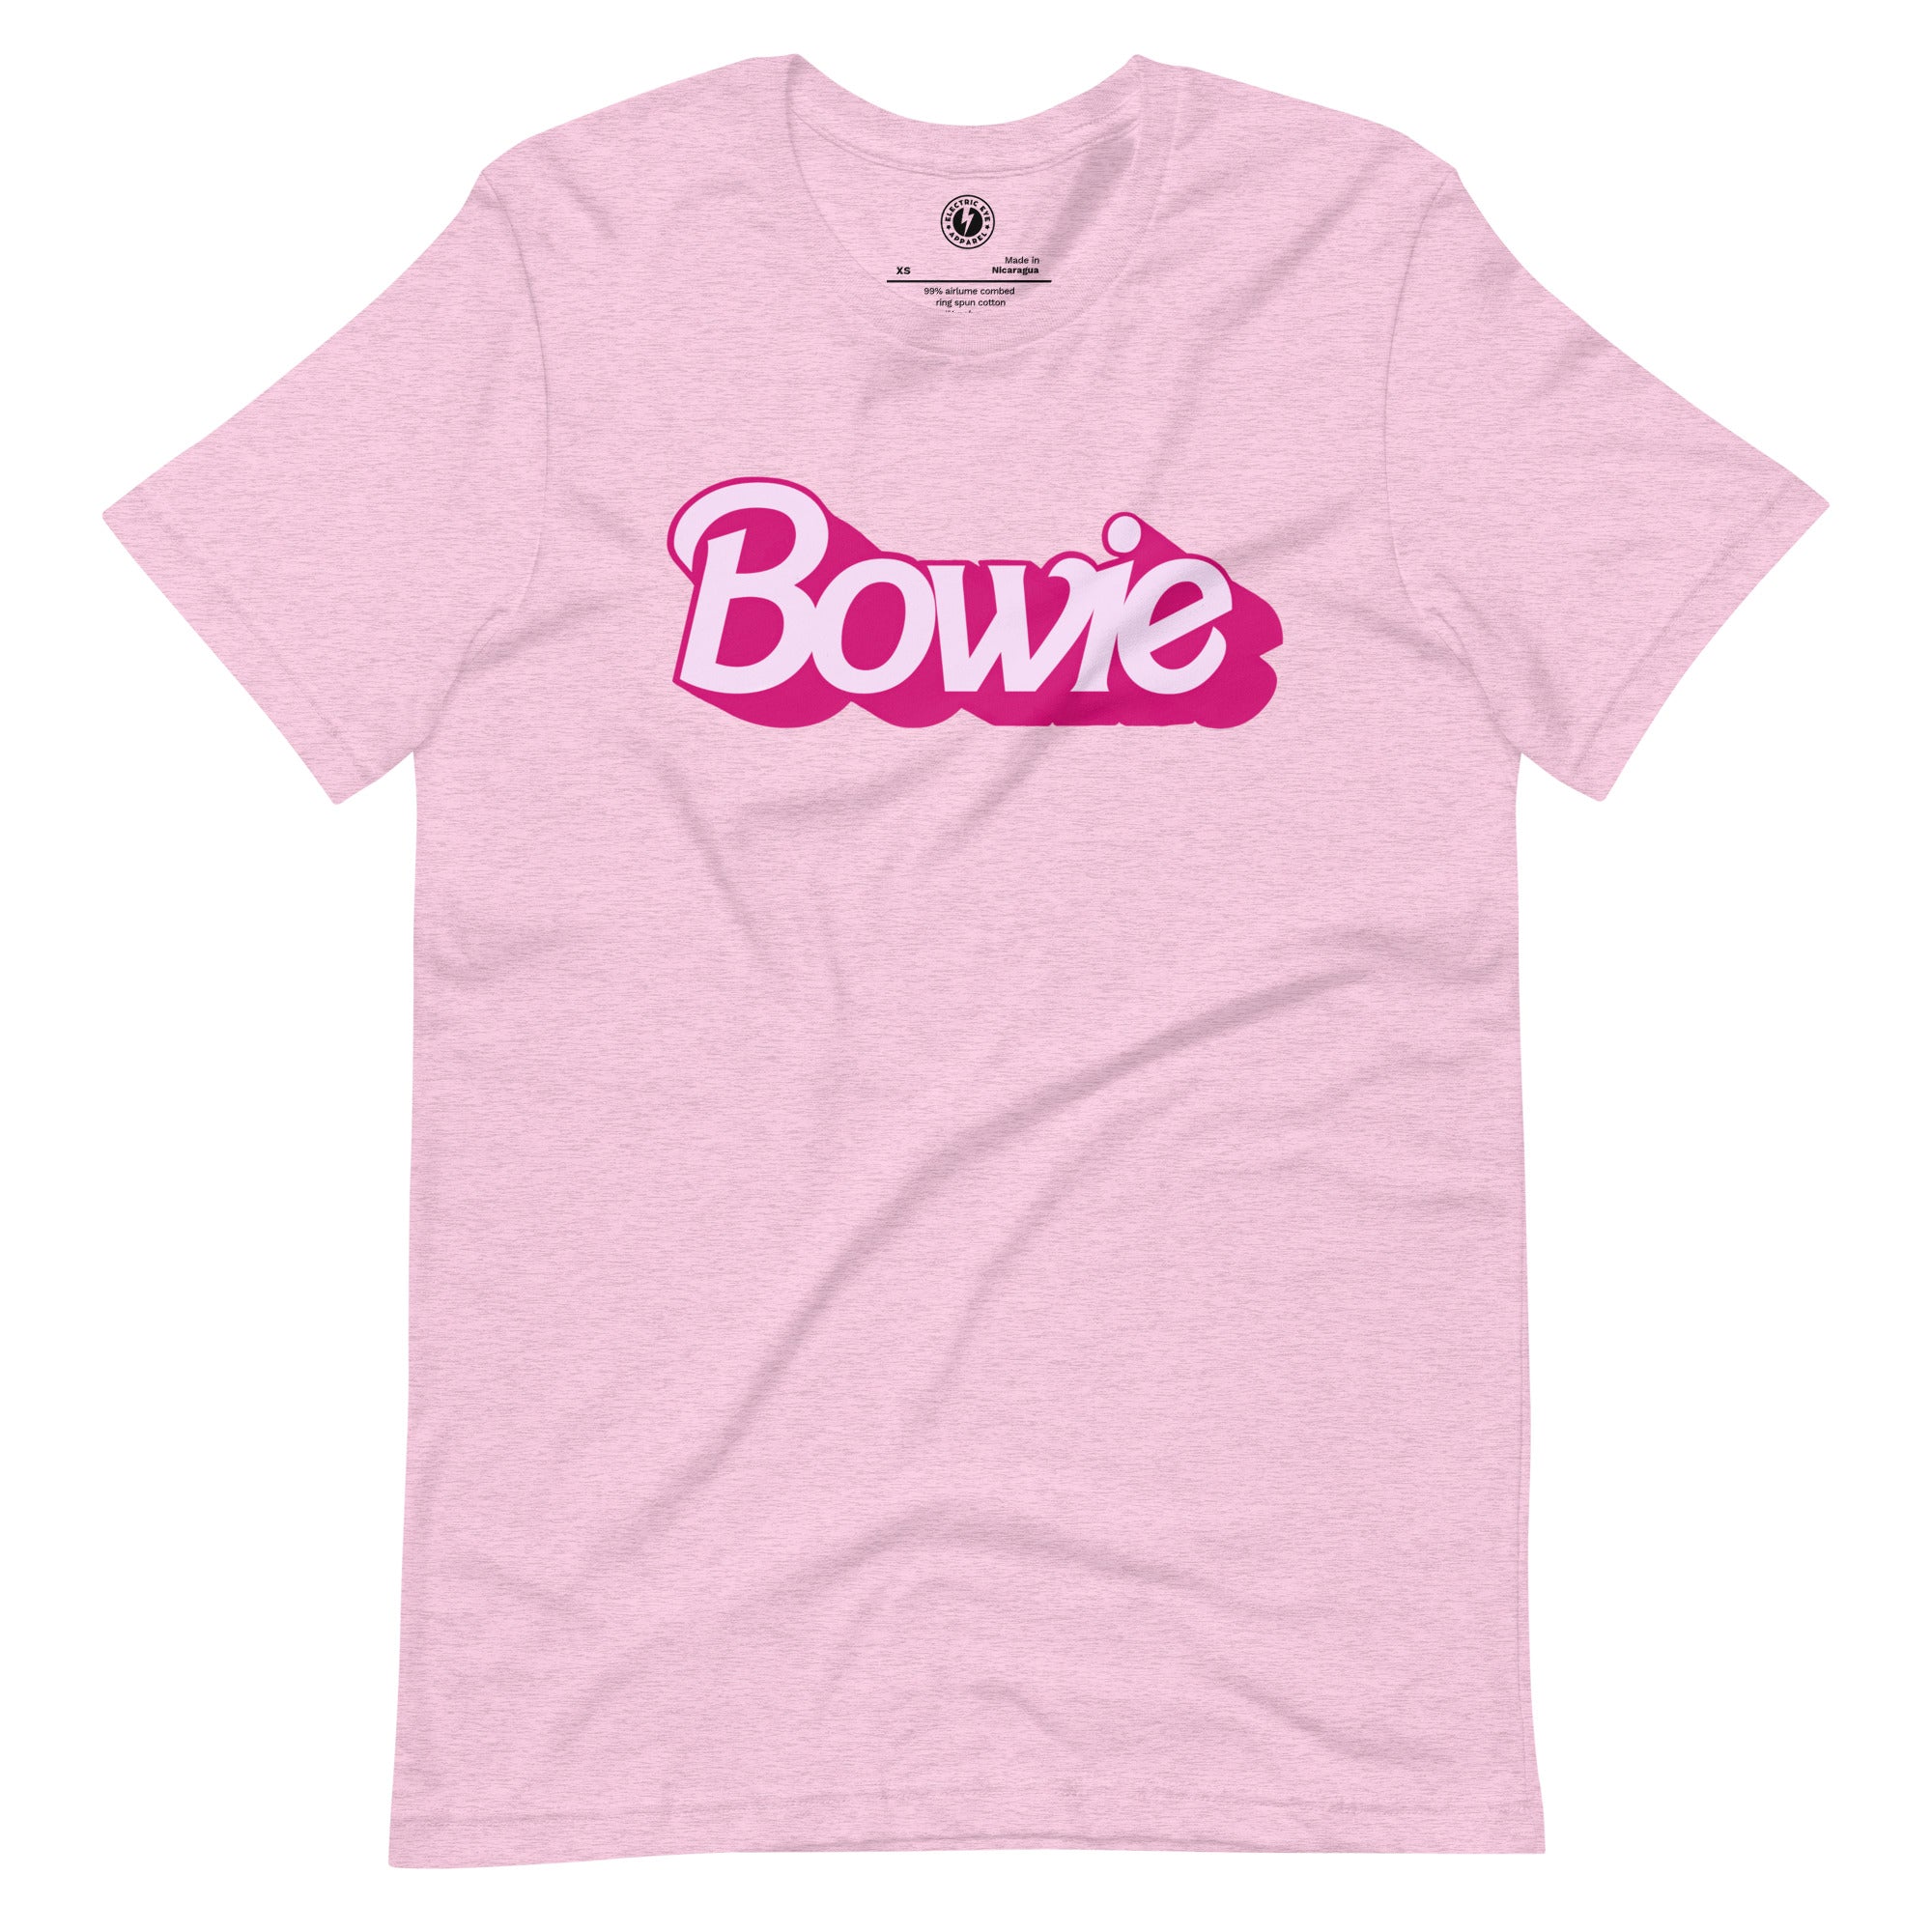 Bowie (famous doll font) Printed Unisex t-shirt